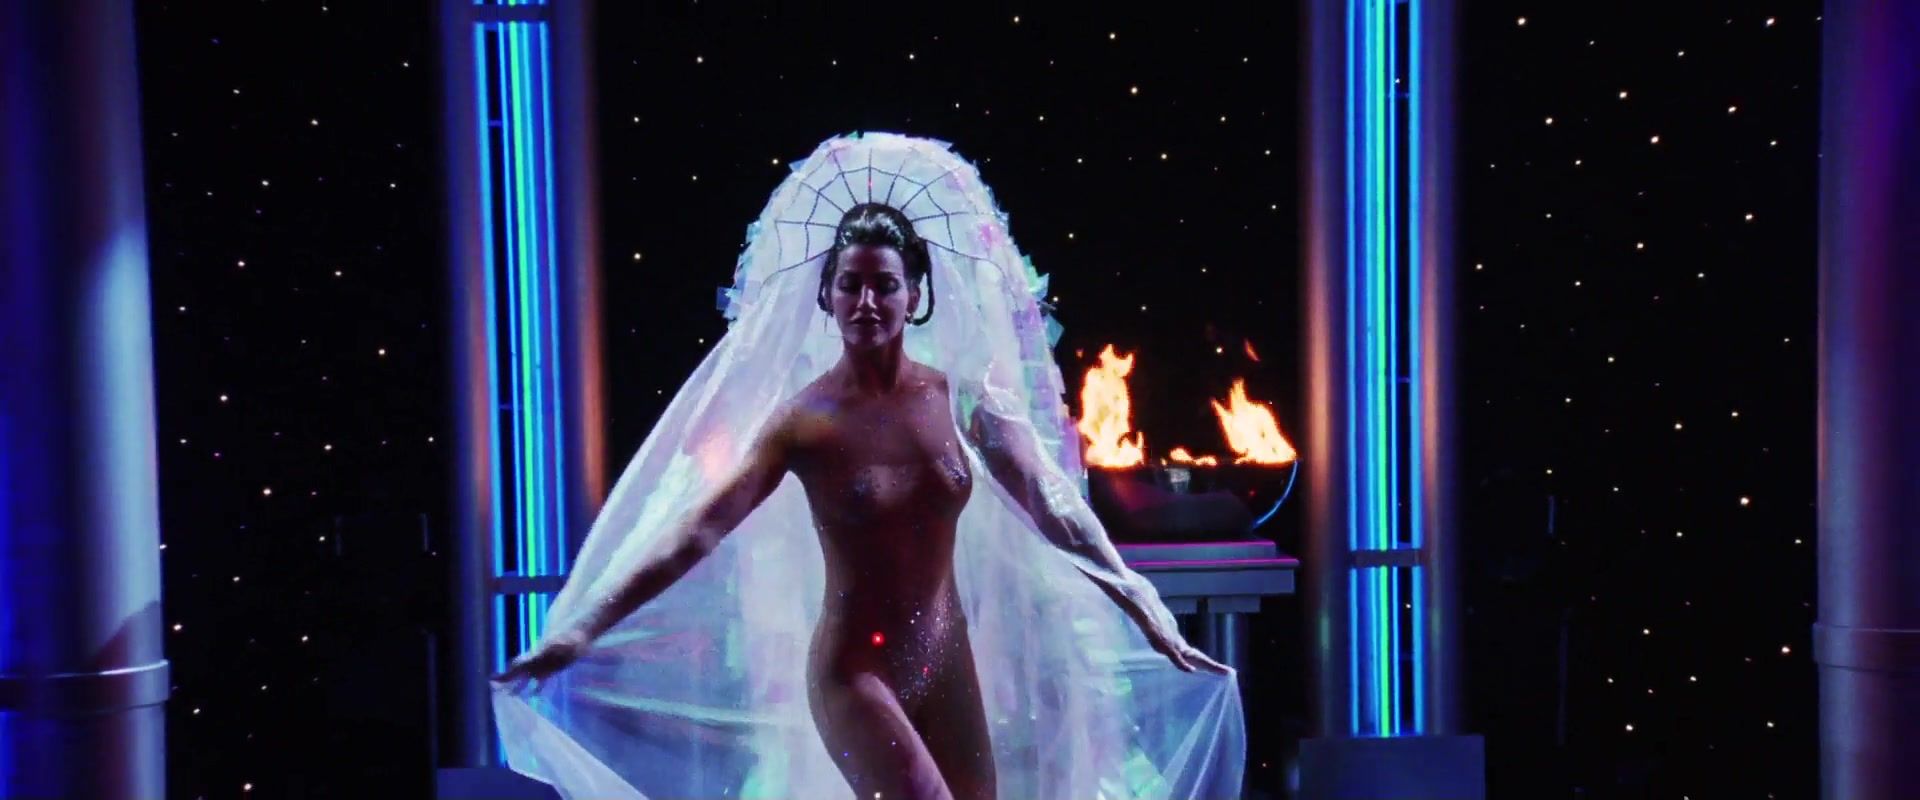 Orgasms Best Striptease Scenes from Movies: Gina Gershon, Elizabeth Berkley - Showgirls (1995) Tory Lane - 2